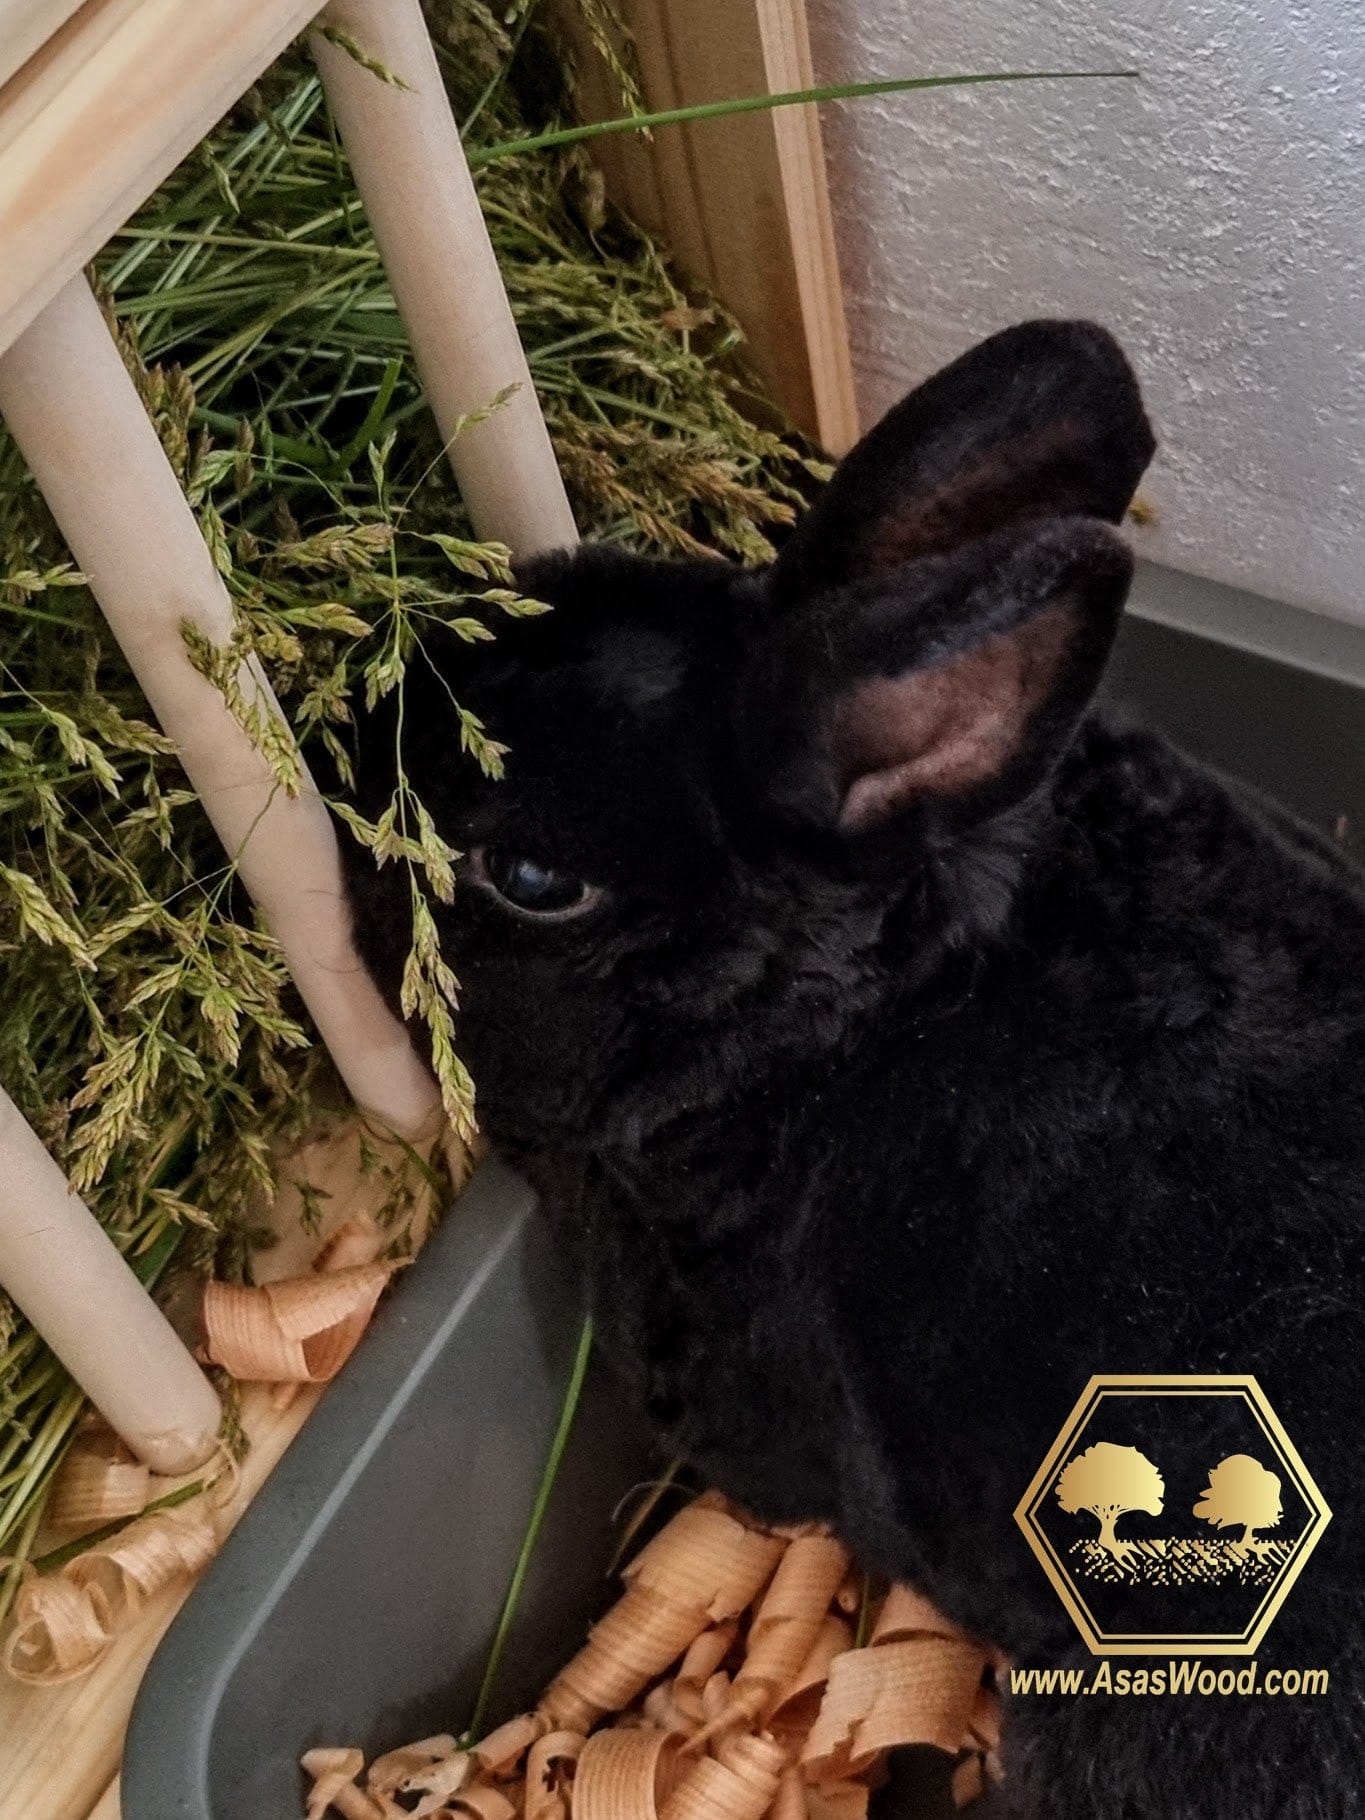 beautiful bunny is eating his hay from wooden handmade hay feeder